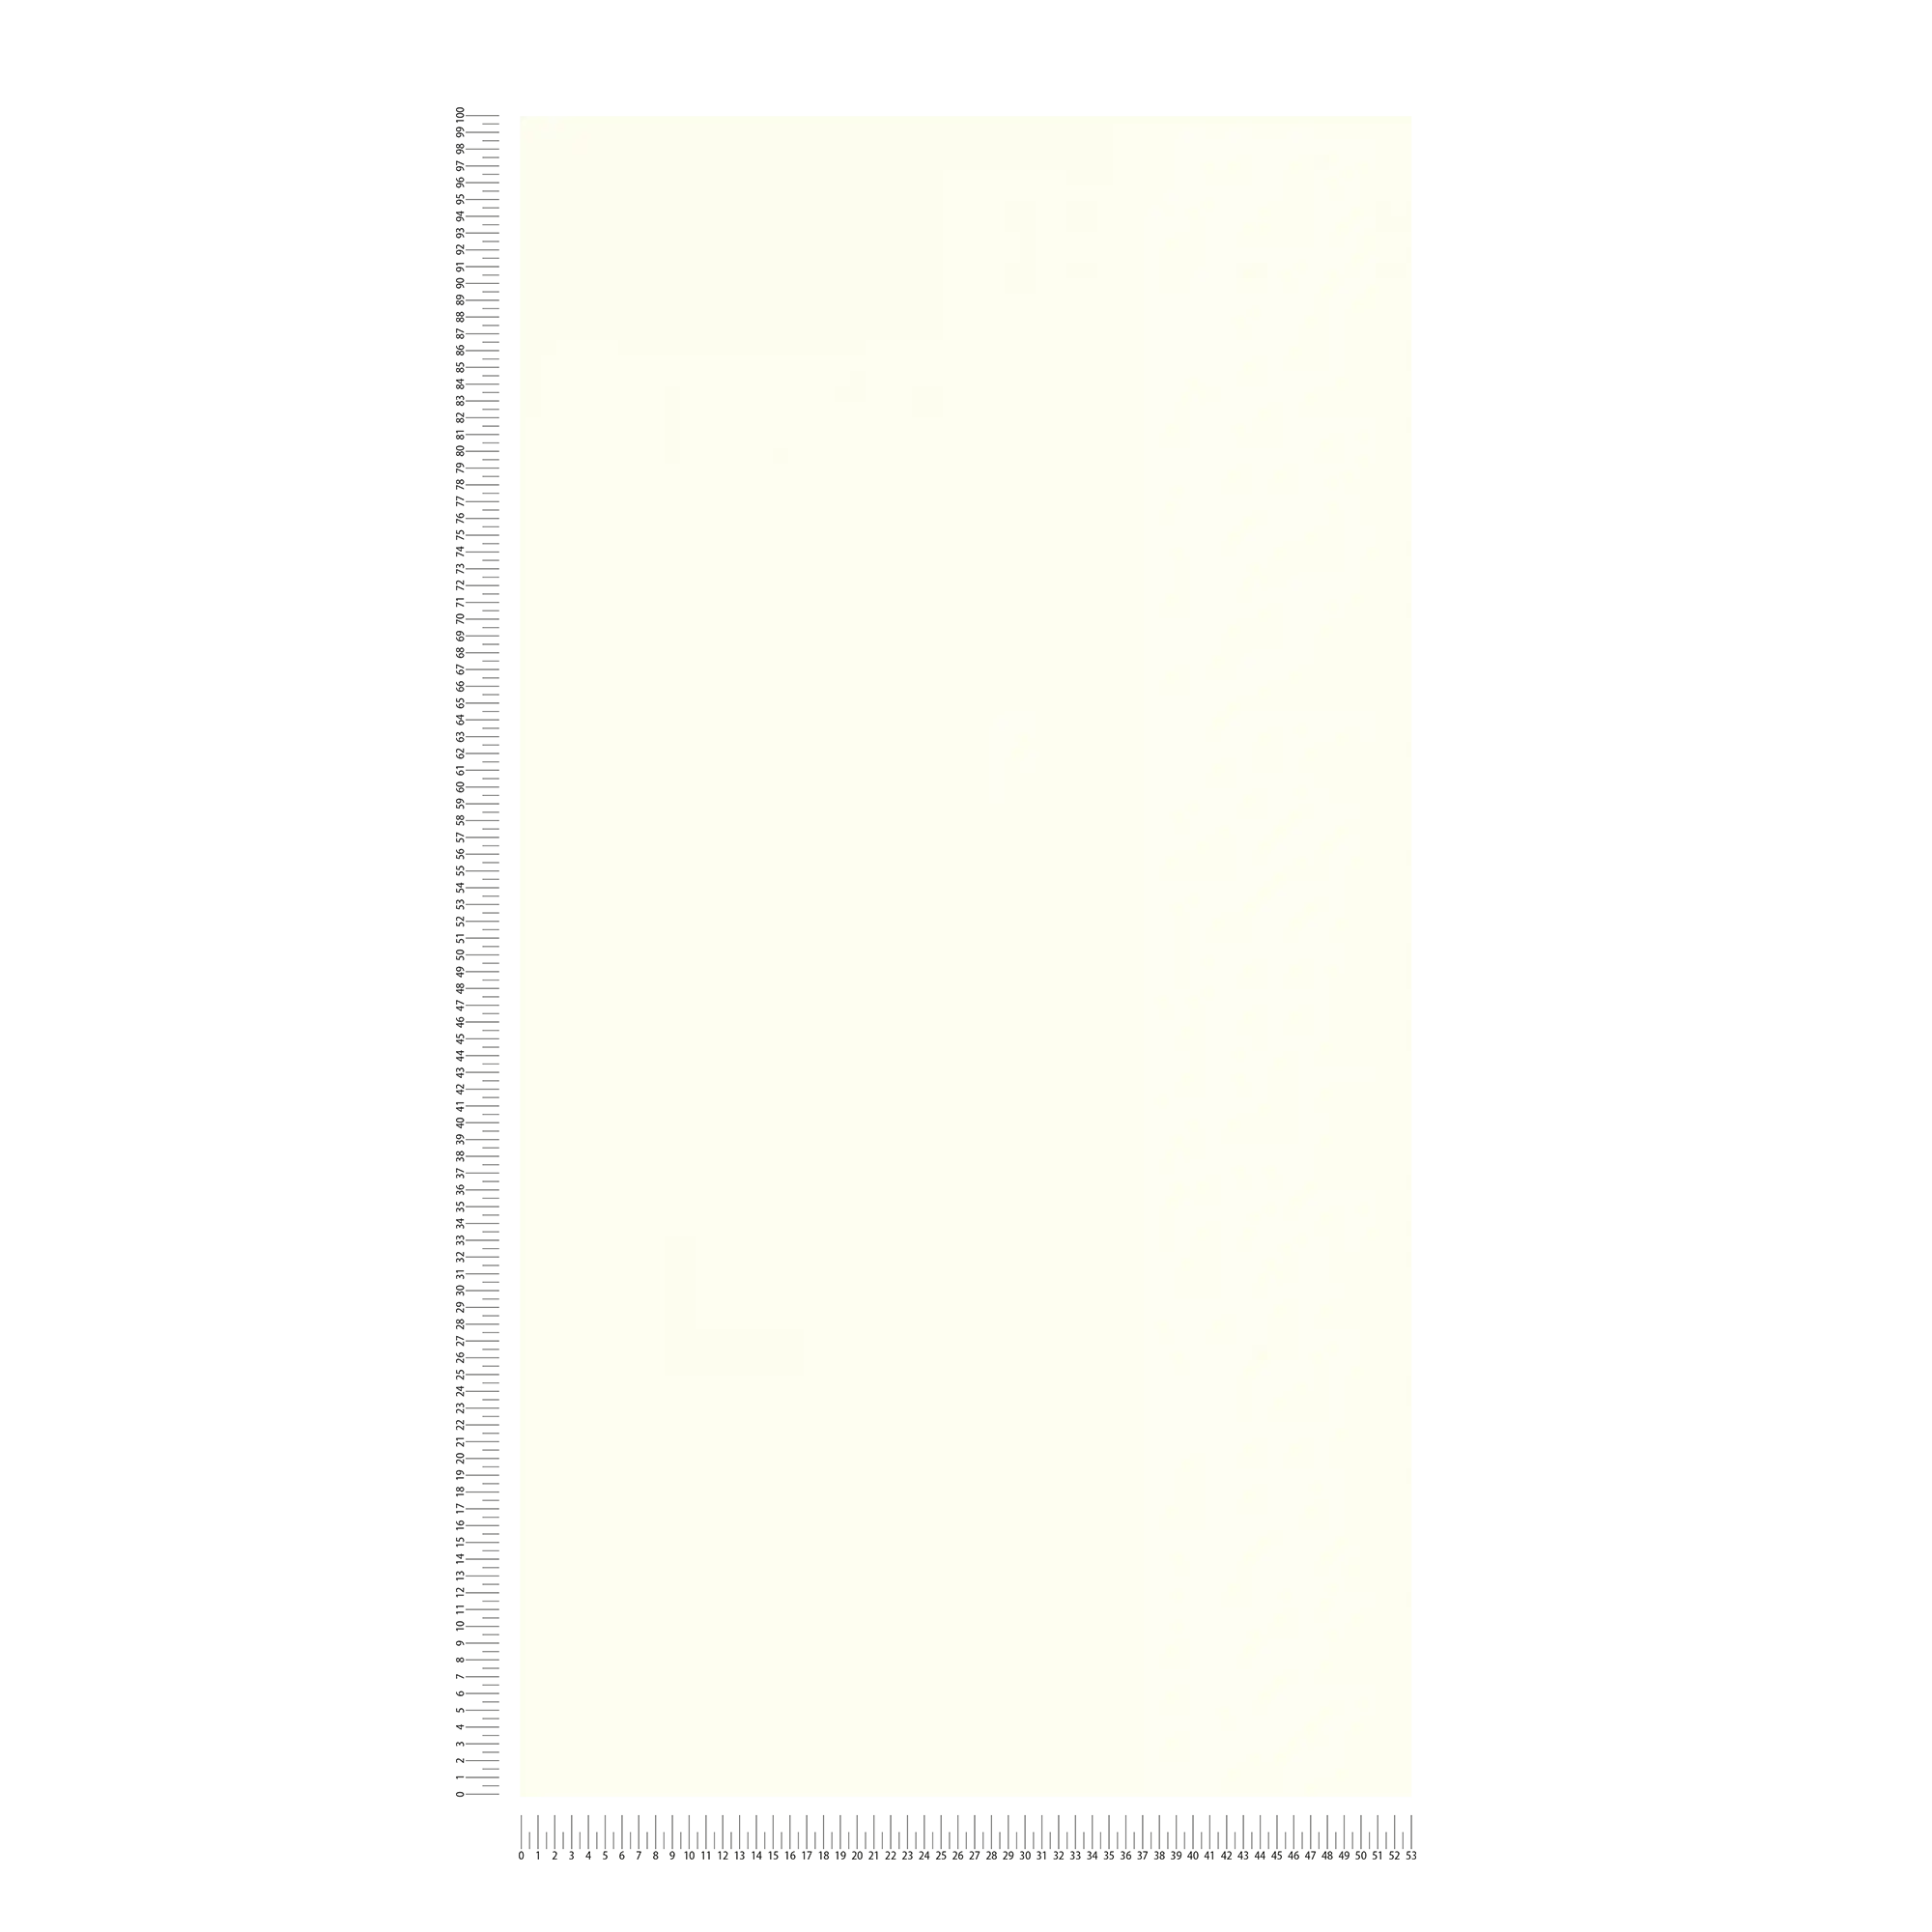             Matt wallpaper plain white with structure
        